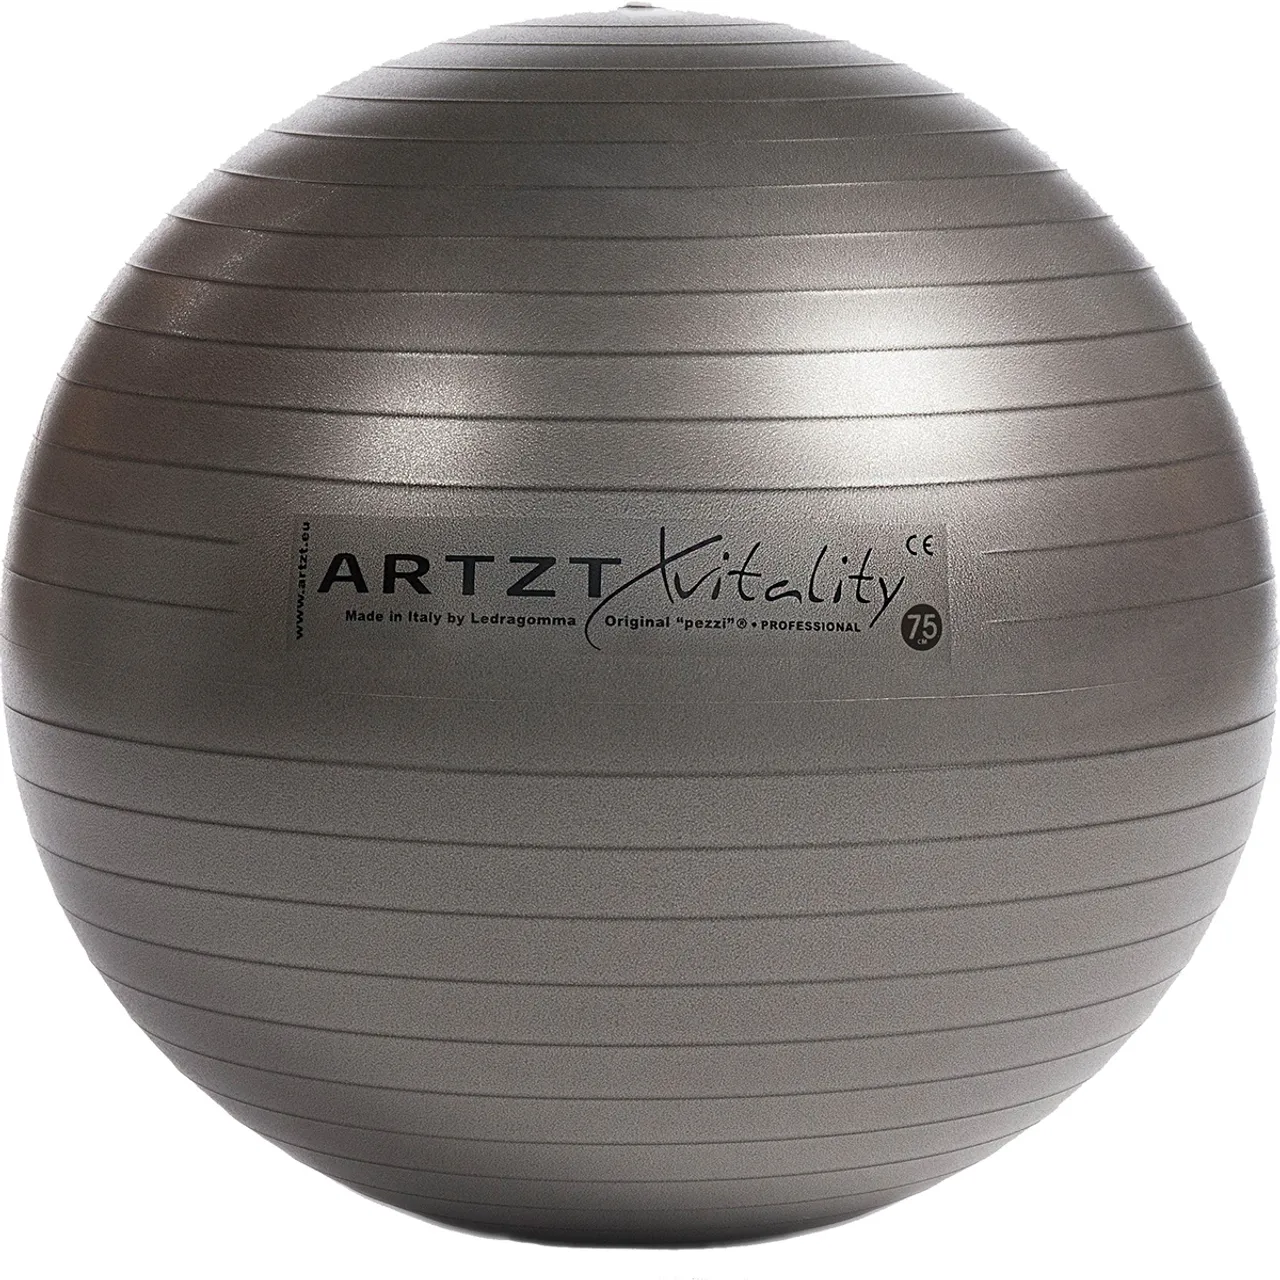 Artzt vitality Fitness-Ball Professional